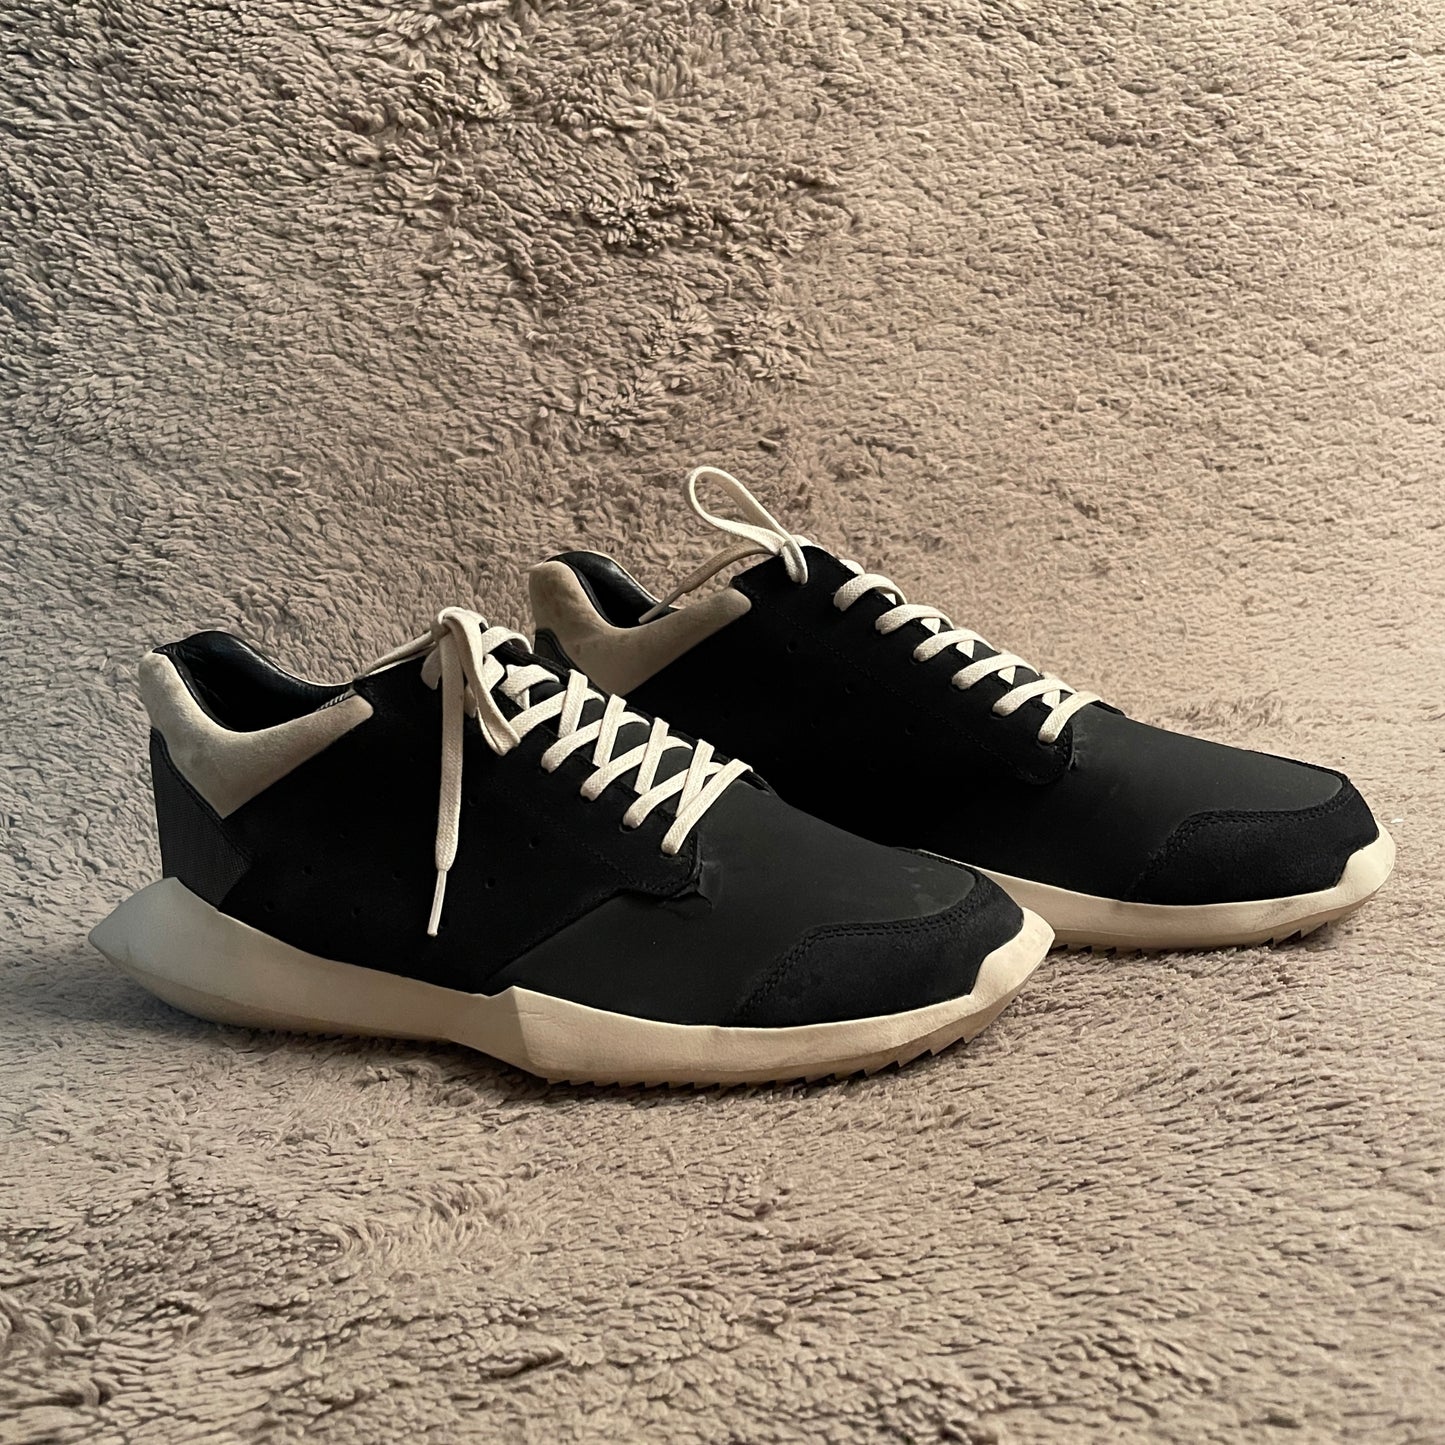 Adidas x Rick Owens Tech Runner Sneakers (US 11 / UK 10.5)